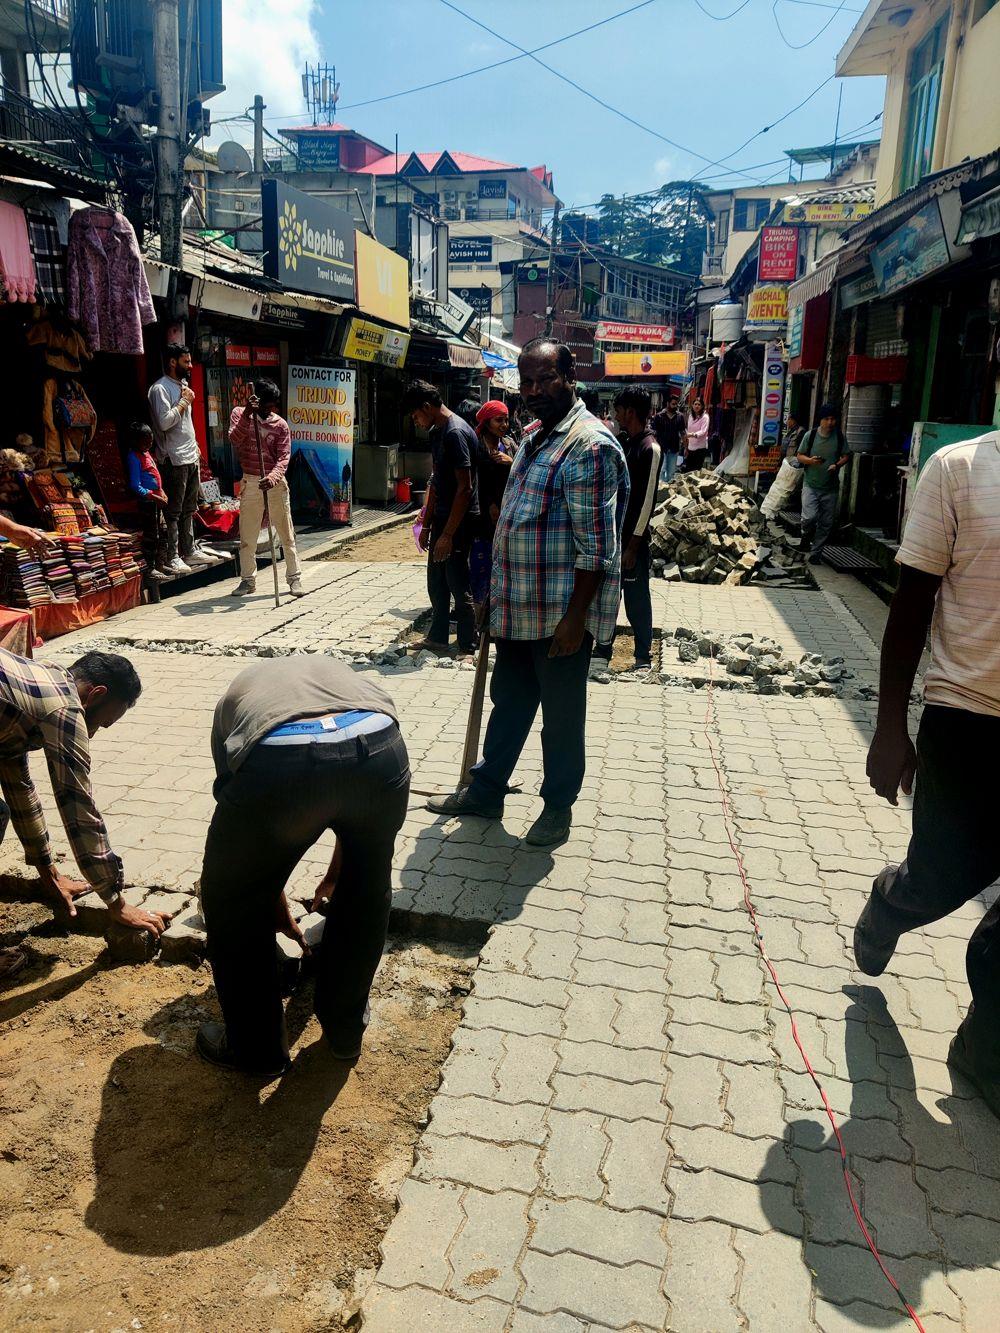 McLeodganj hoteliers resent digging of streets